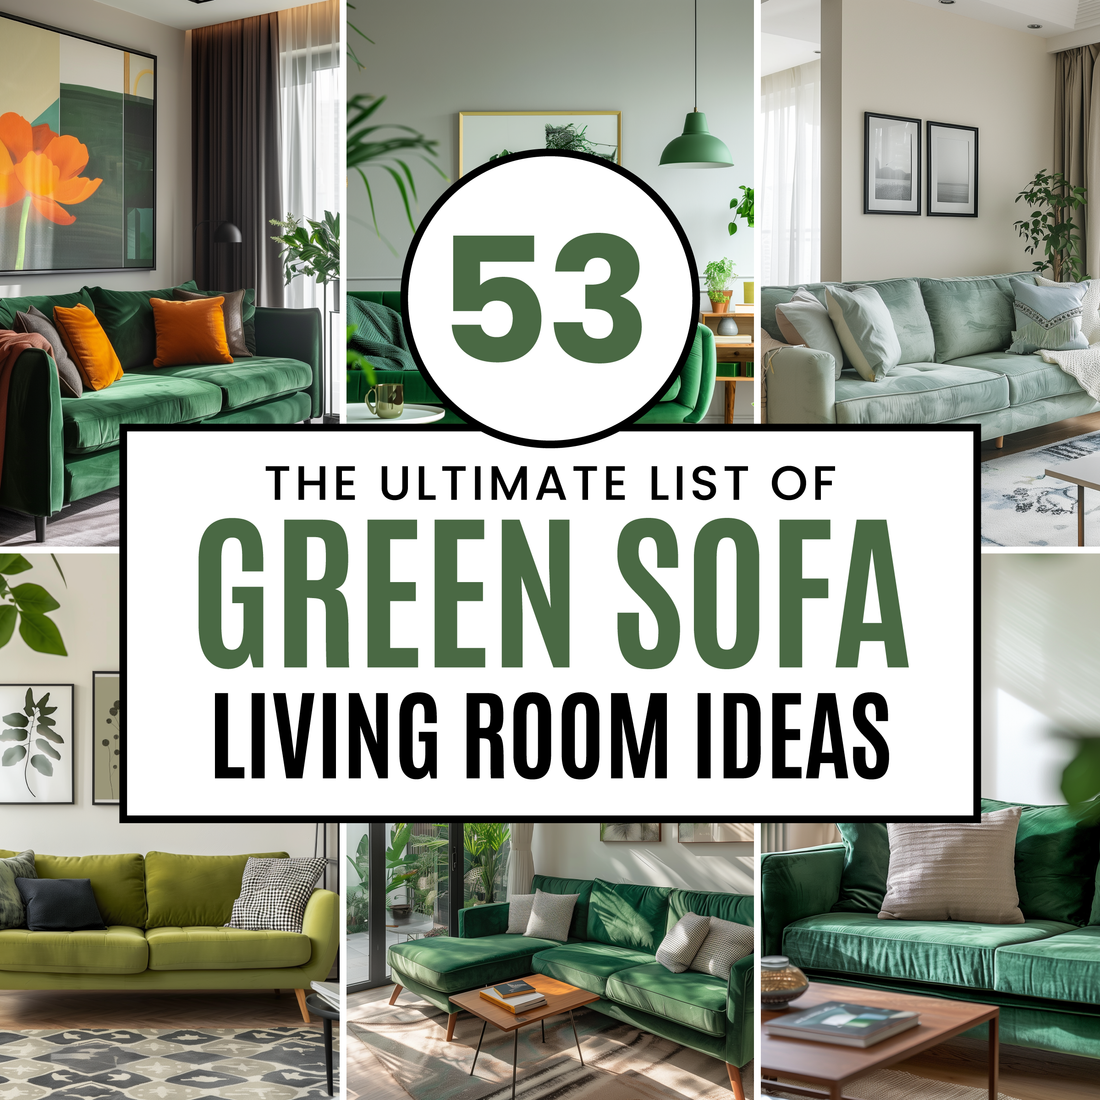 50+ Green Sofa Ideas for a Modern and Cozy Living Room Decor